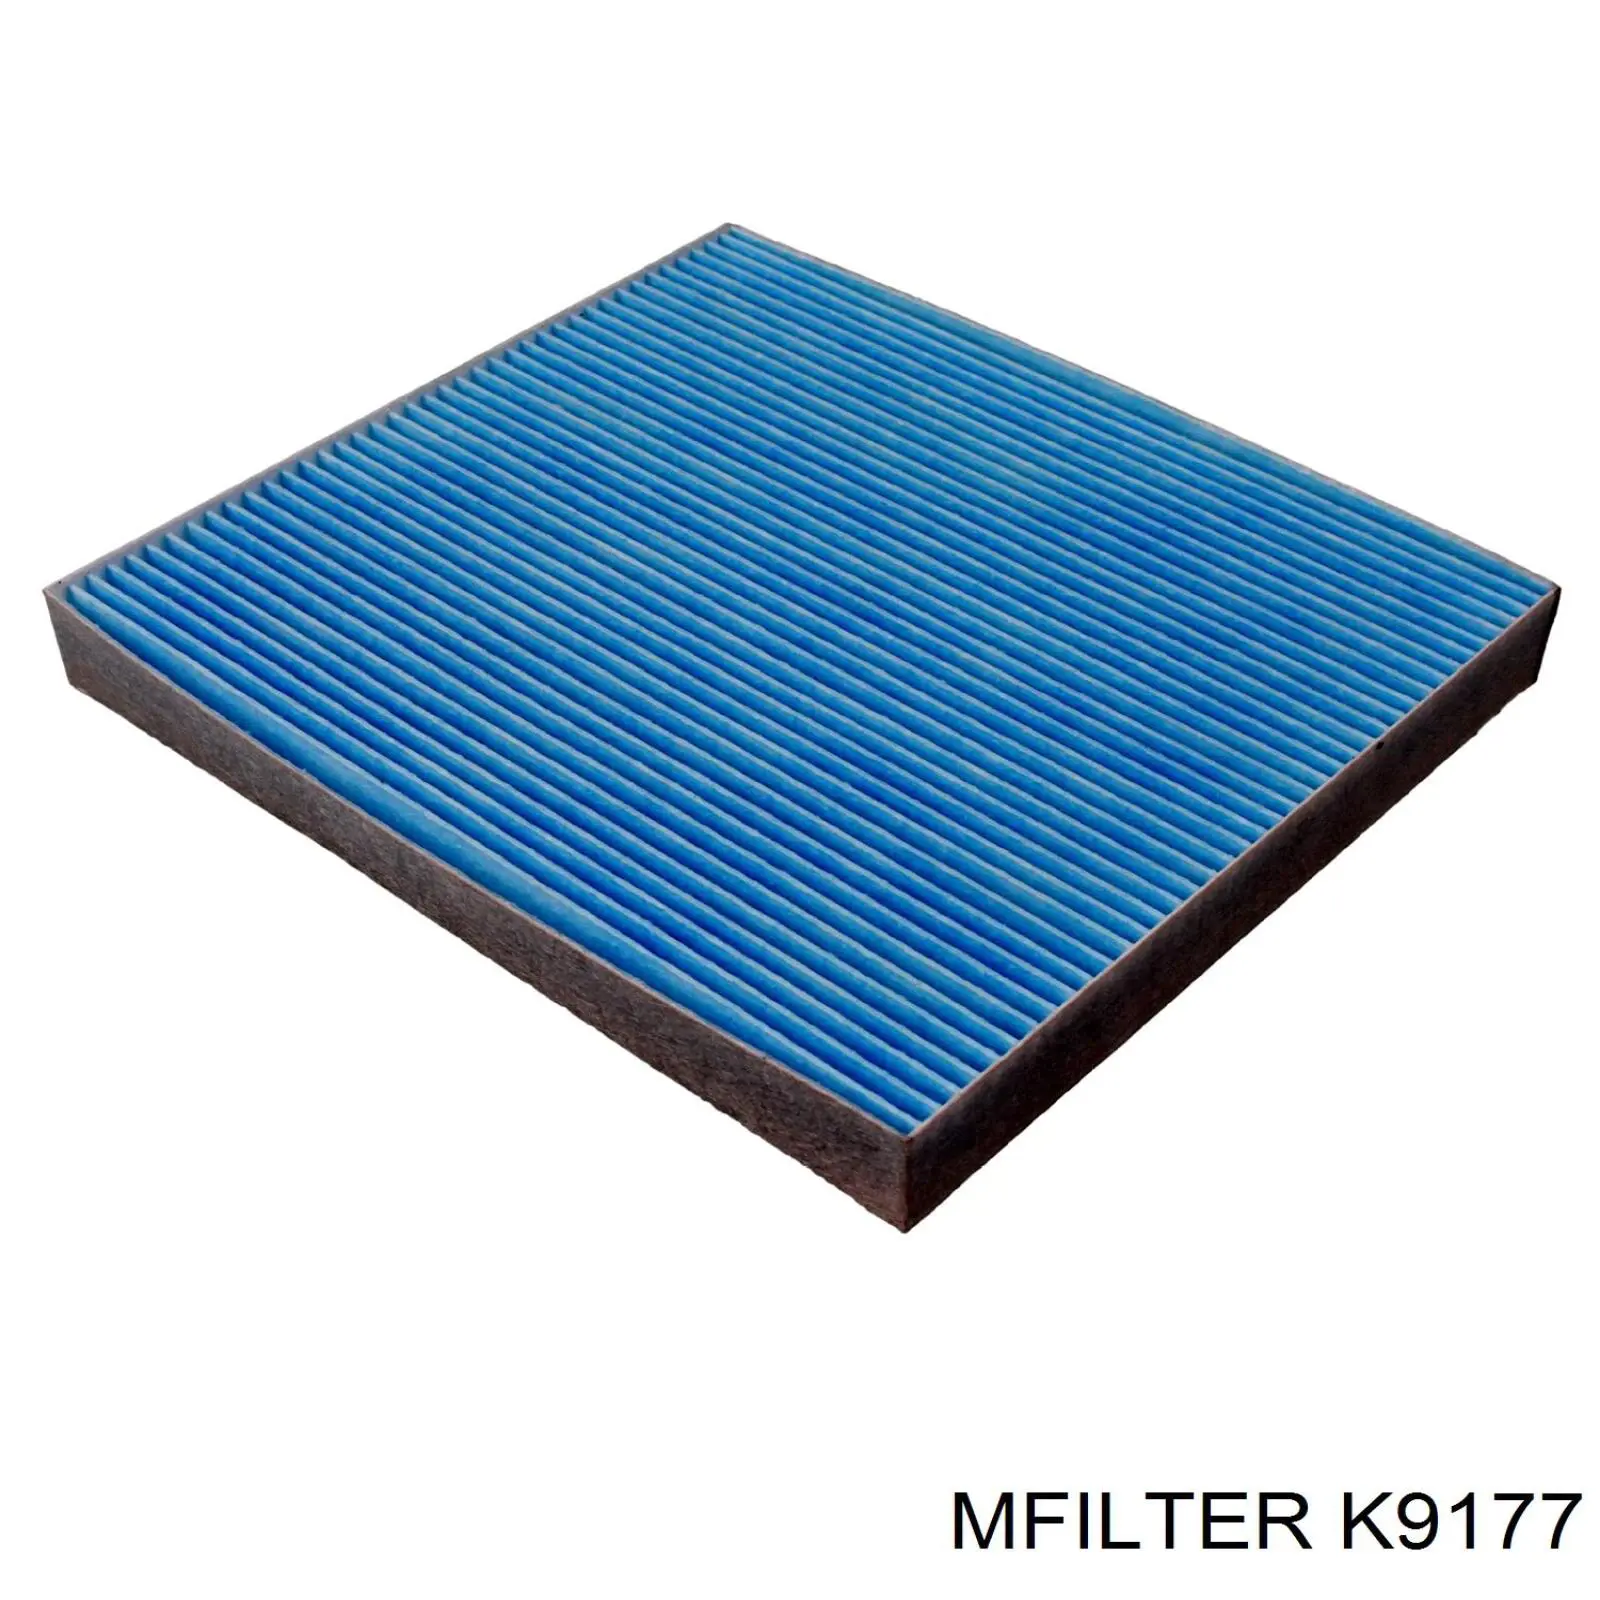 K9177 Mfilter filtro de salão